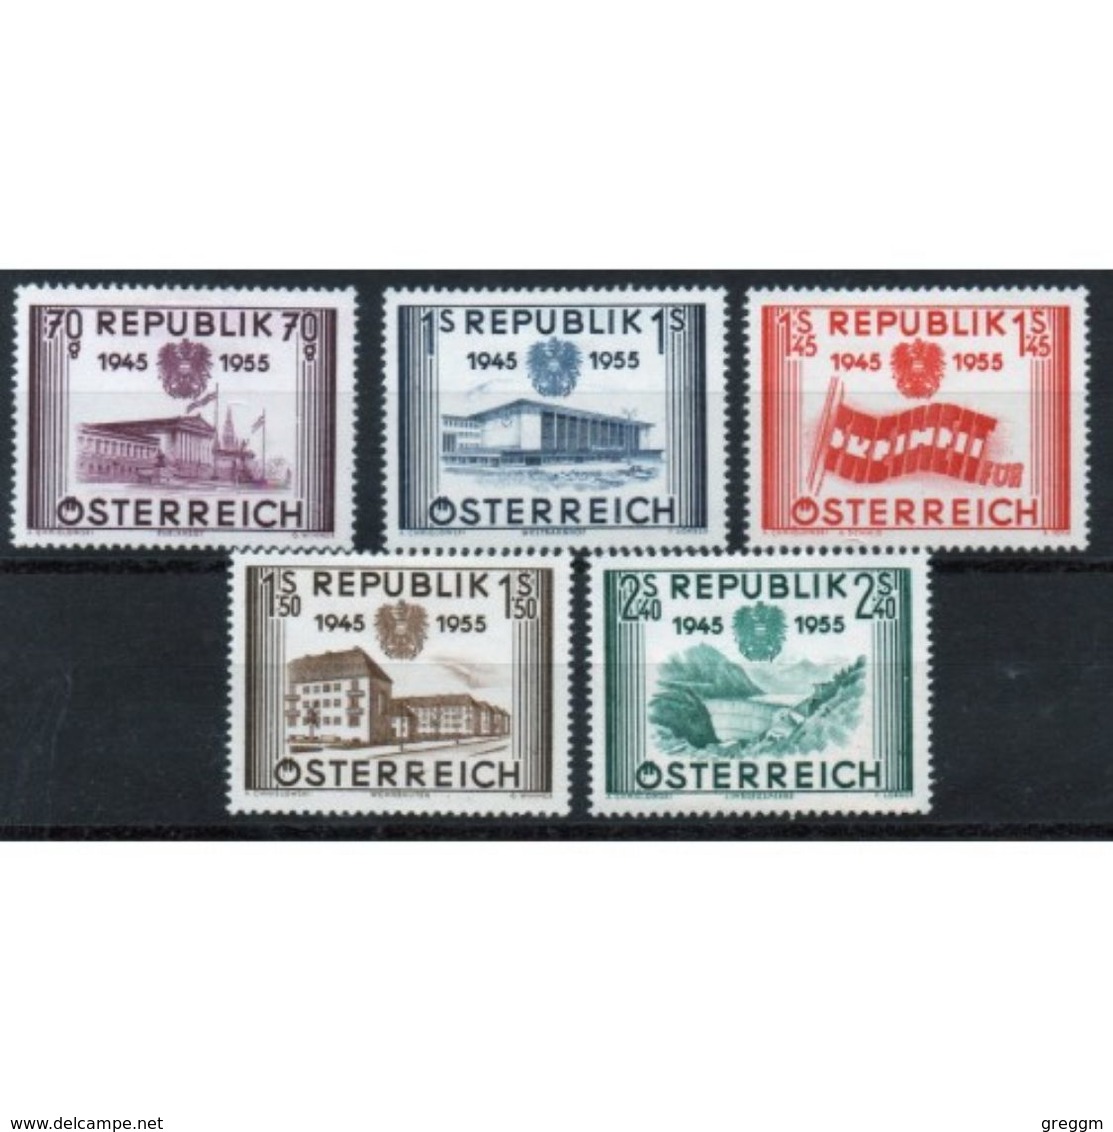 Austria 1955 Set To Celebrate The 10th Anniversary Of Re-establishment Of Austrian Republic. - Unused Stamps